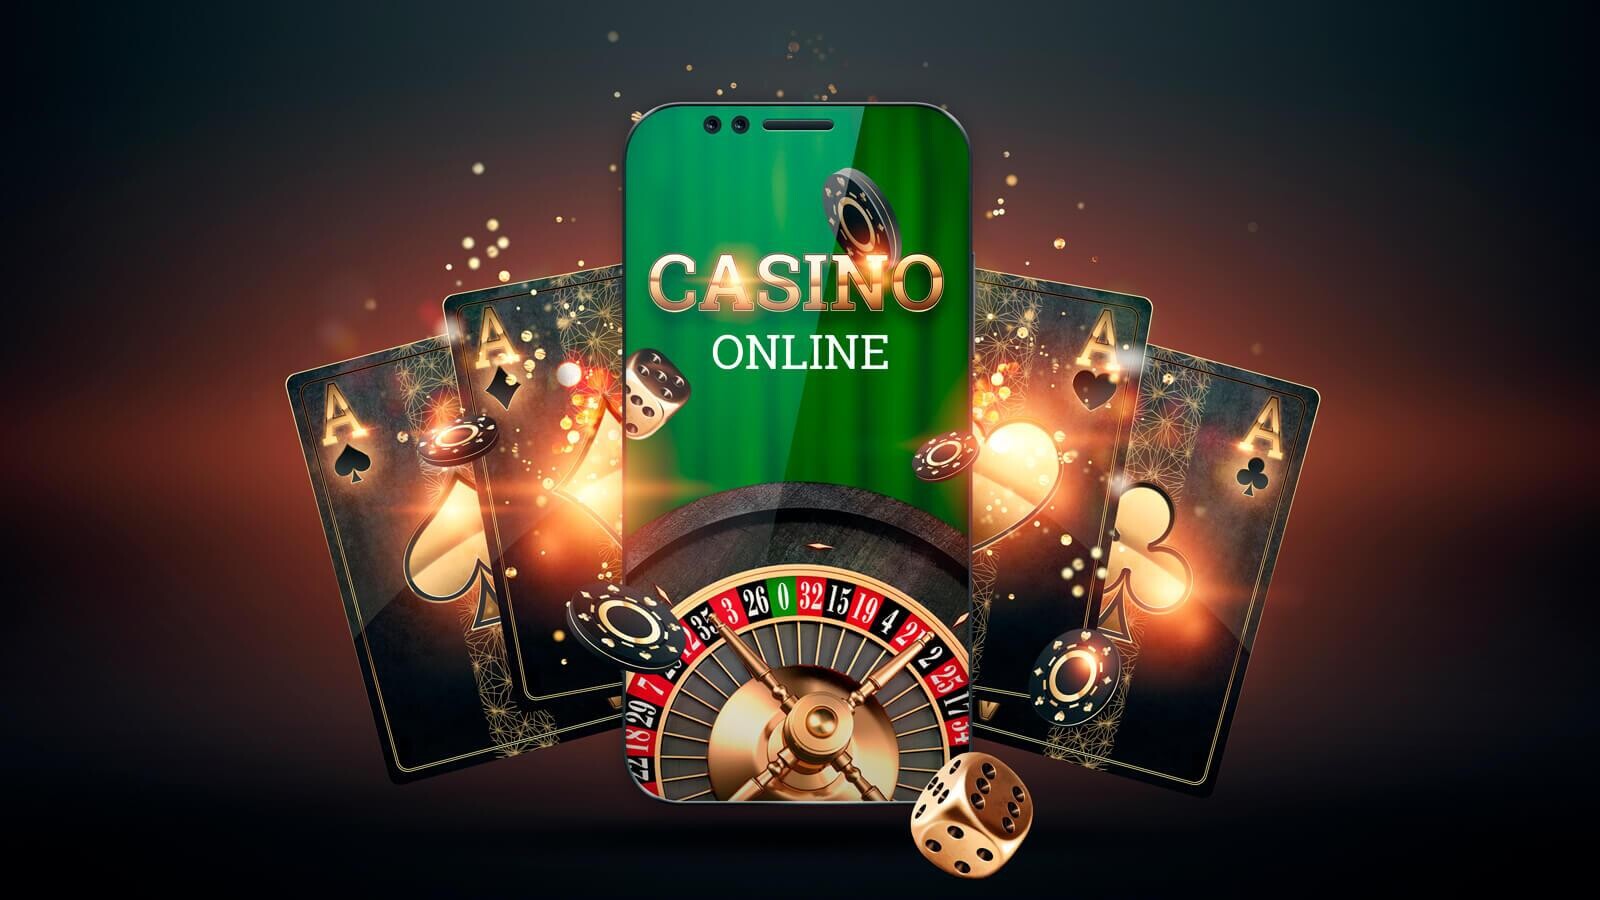 Best Casino App UK